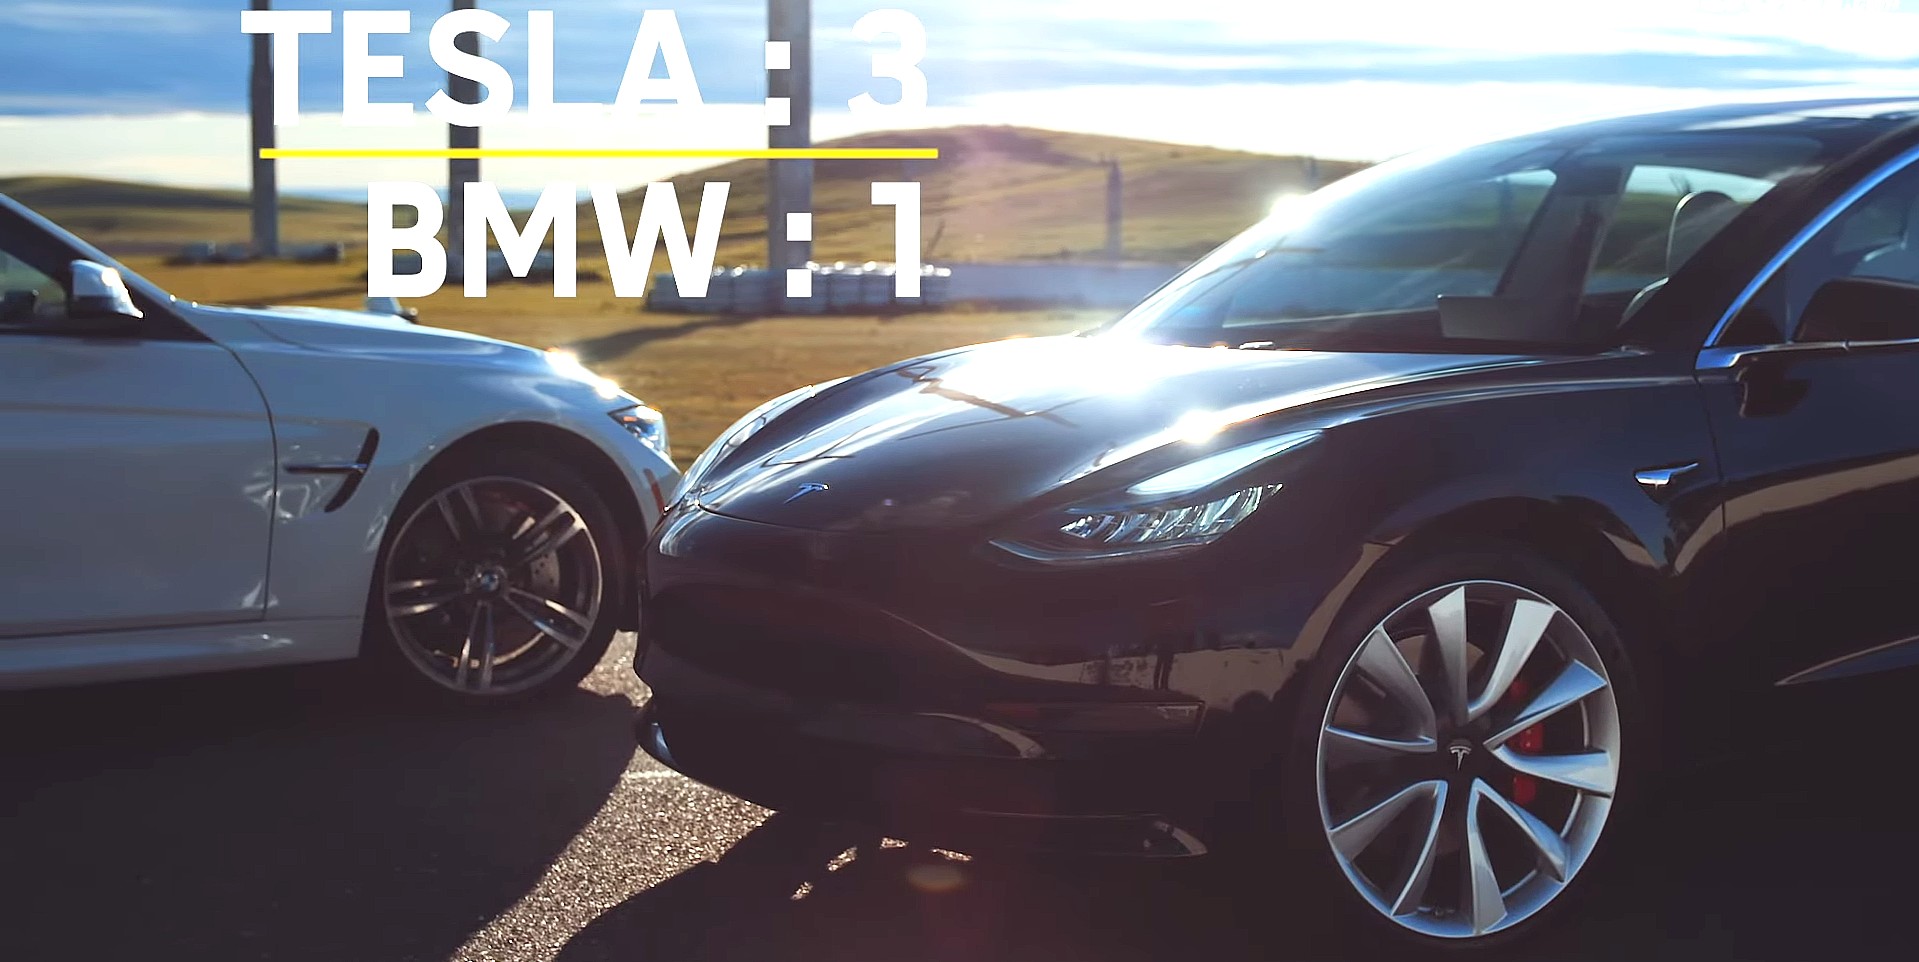 Watch Tesla’s Model 3 spank the BMW M3 in head-to-head track test (VIDEO)